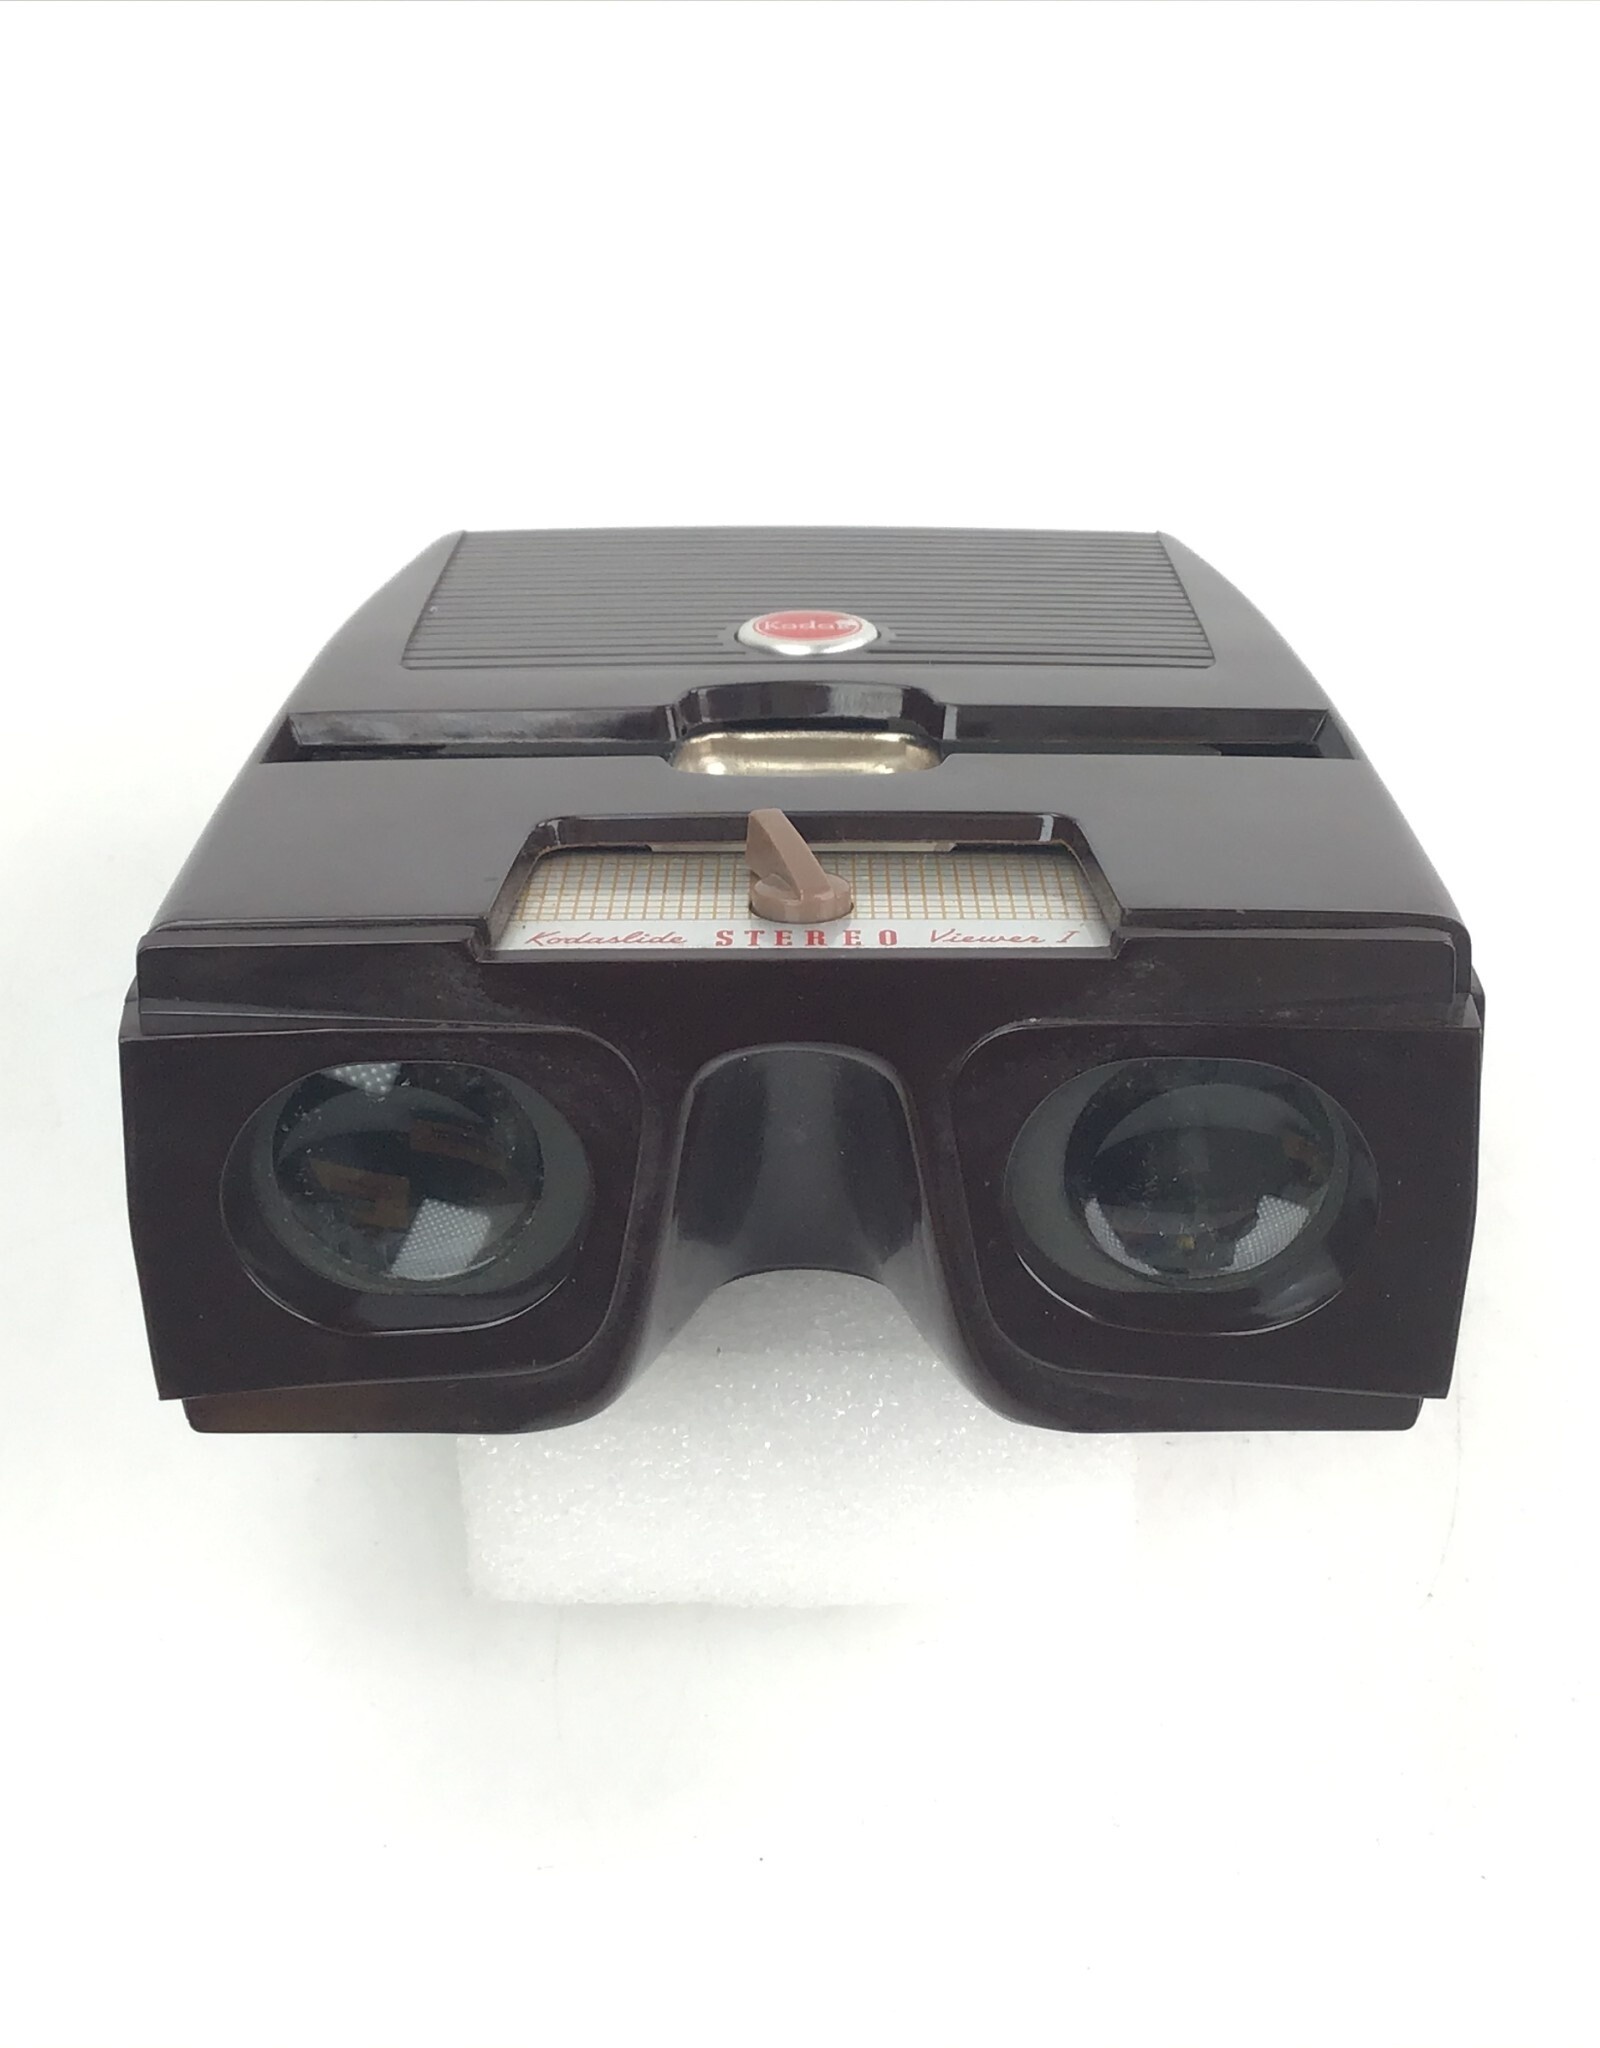 Kodak Stereo Viewer I Battery Type in Box Used Good